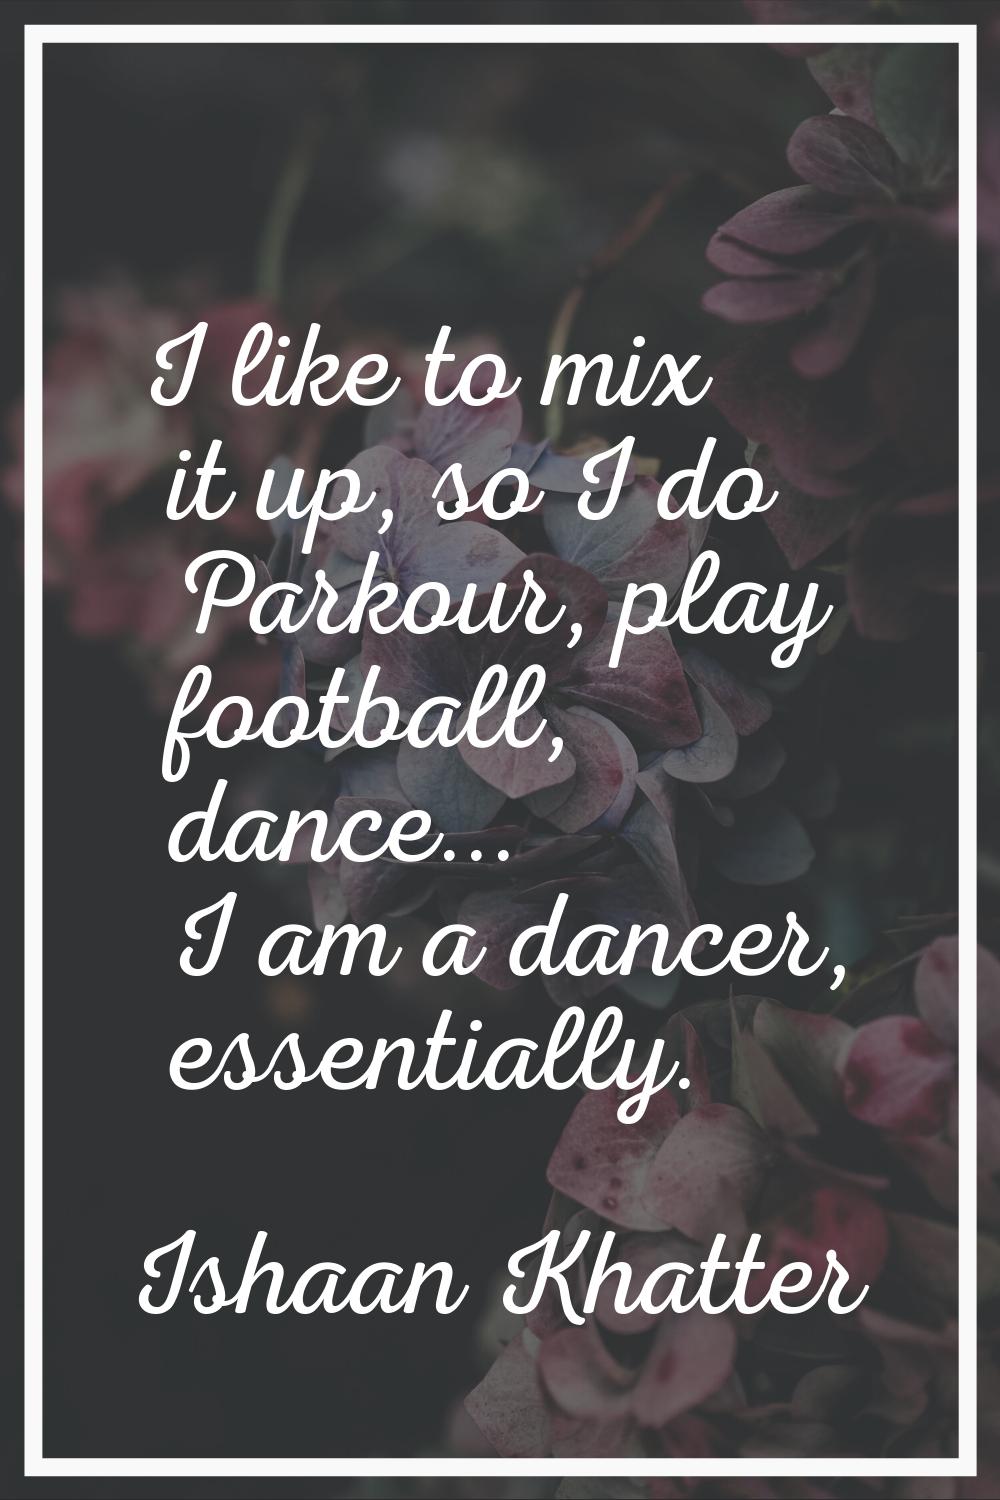 I like to mix it up, so I do Parkour, play football, dance... I am a dancer, essentially.